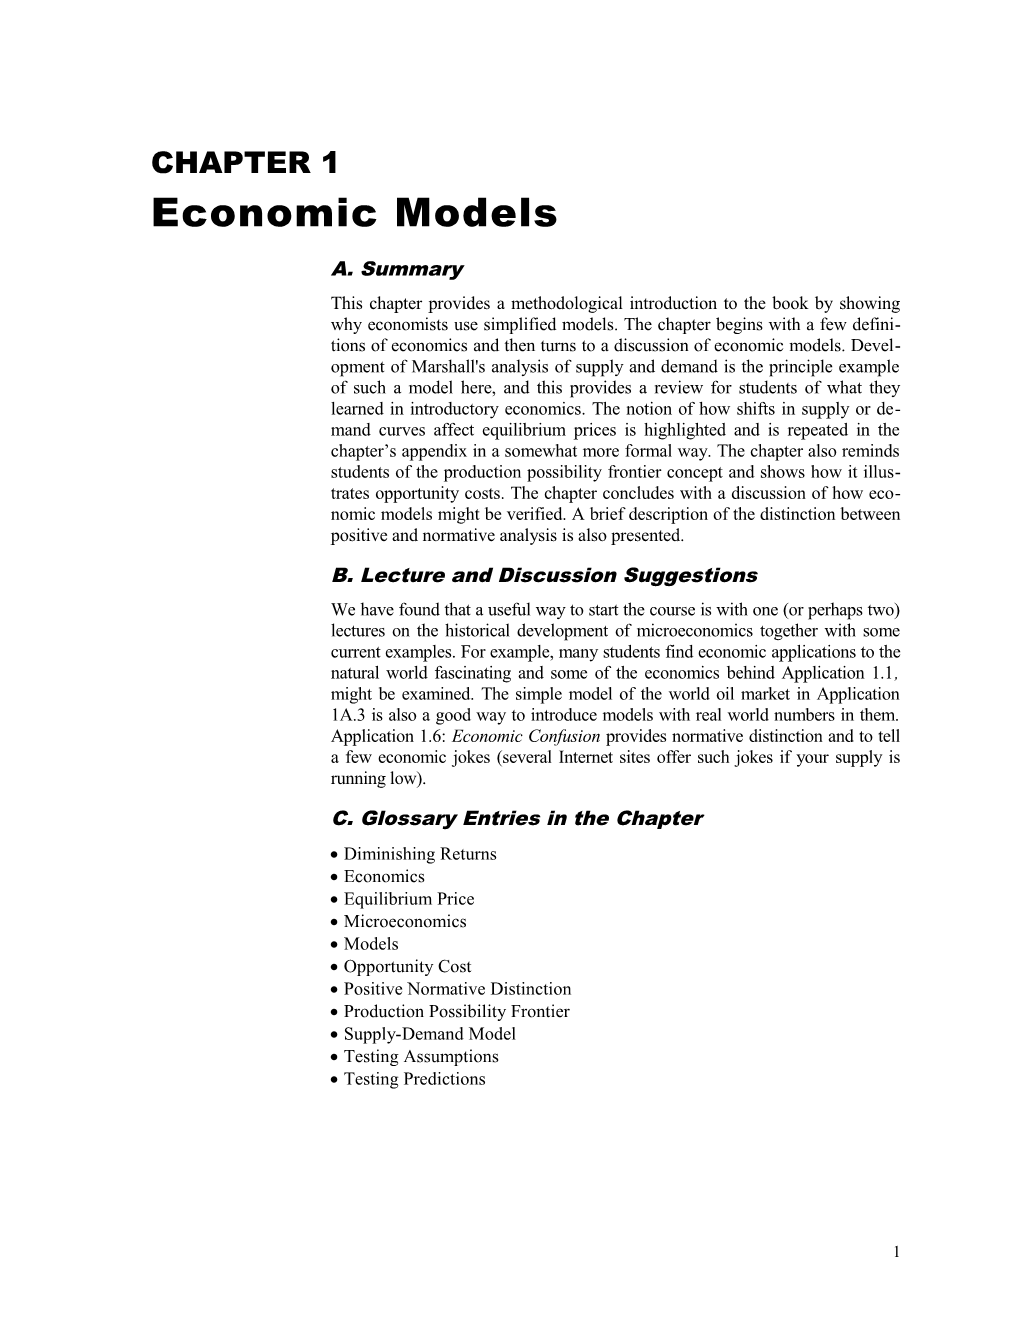 Chapter 1: Economic Models